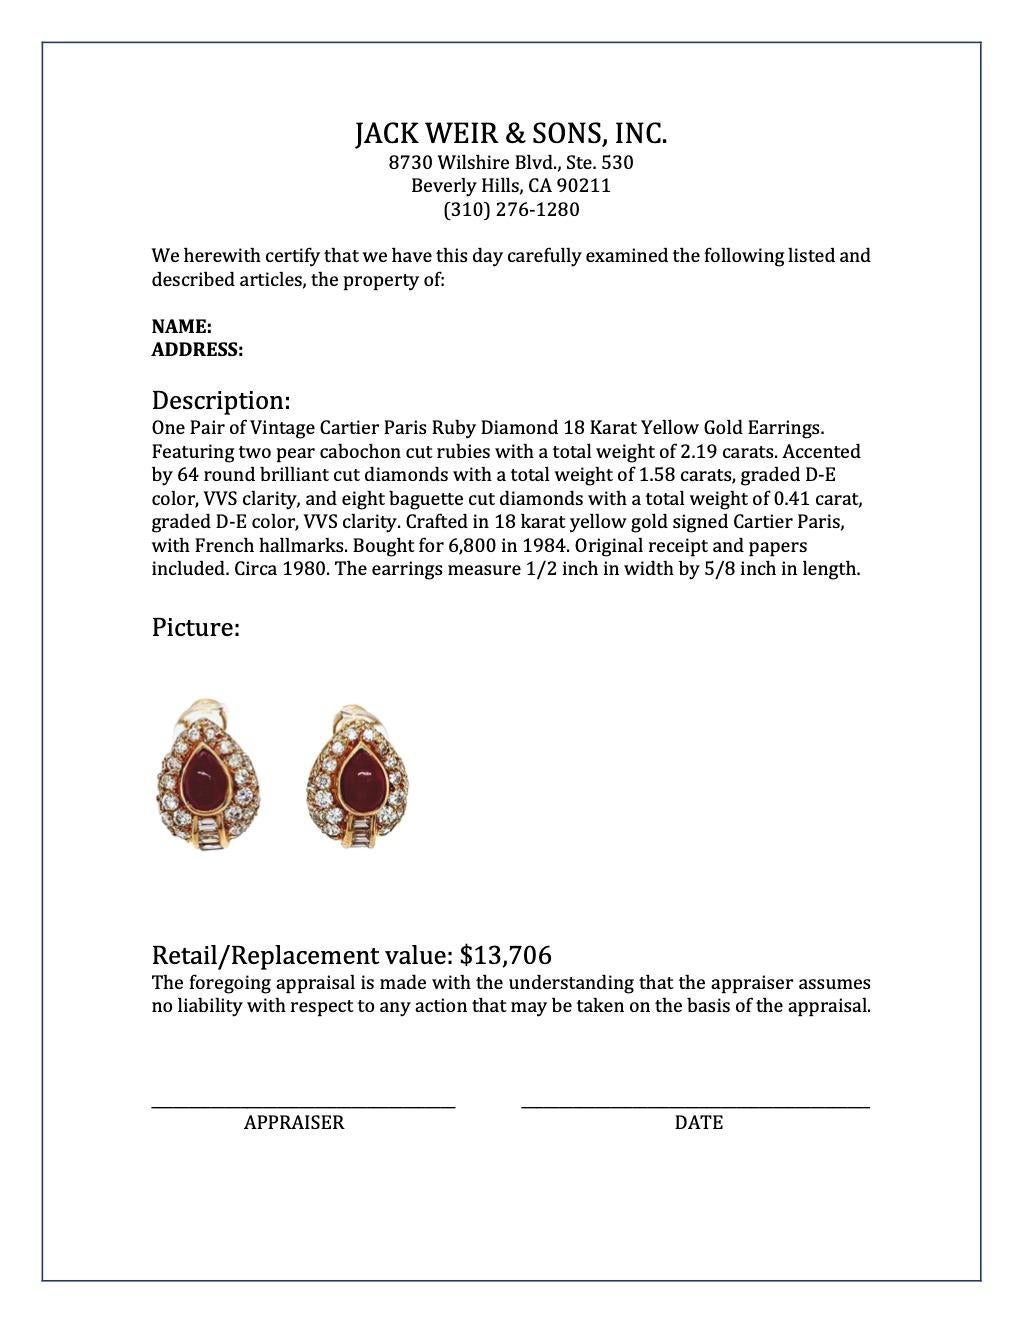 Vintage Cartier Paris Ruby Diamond 18 Karat Yellow Gold Earrings 2